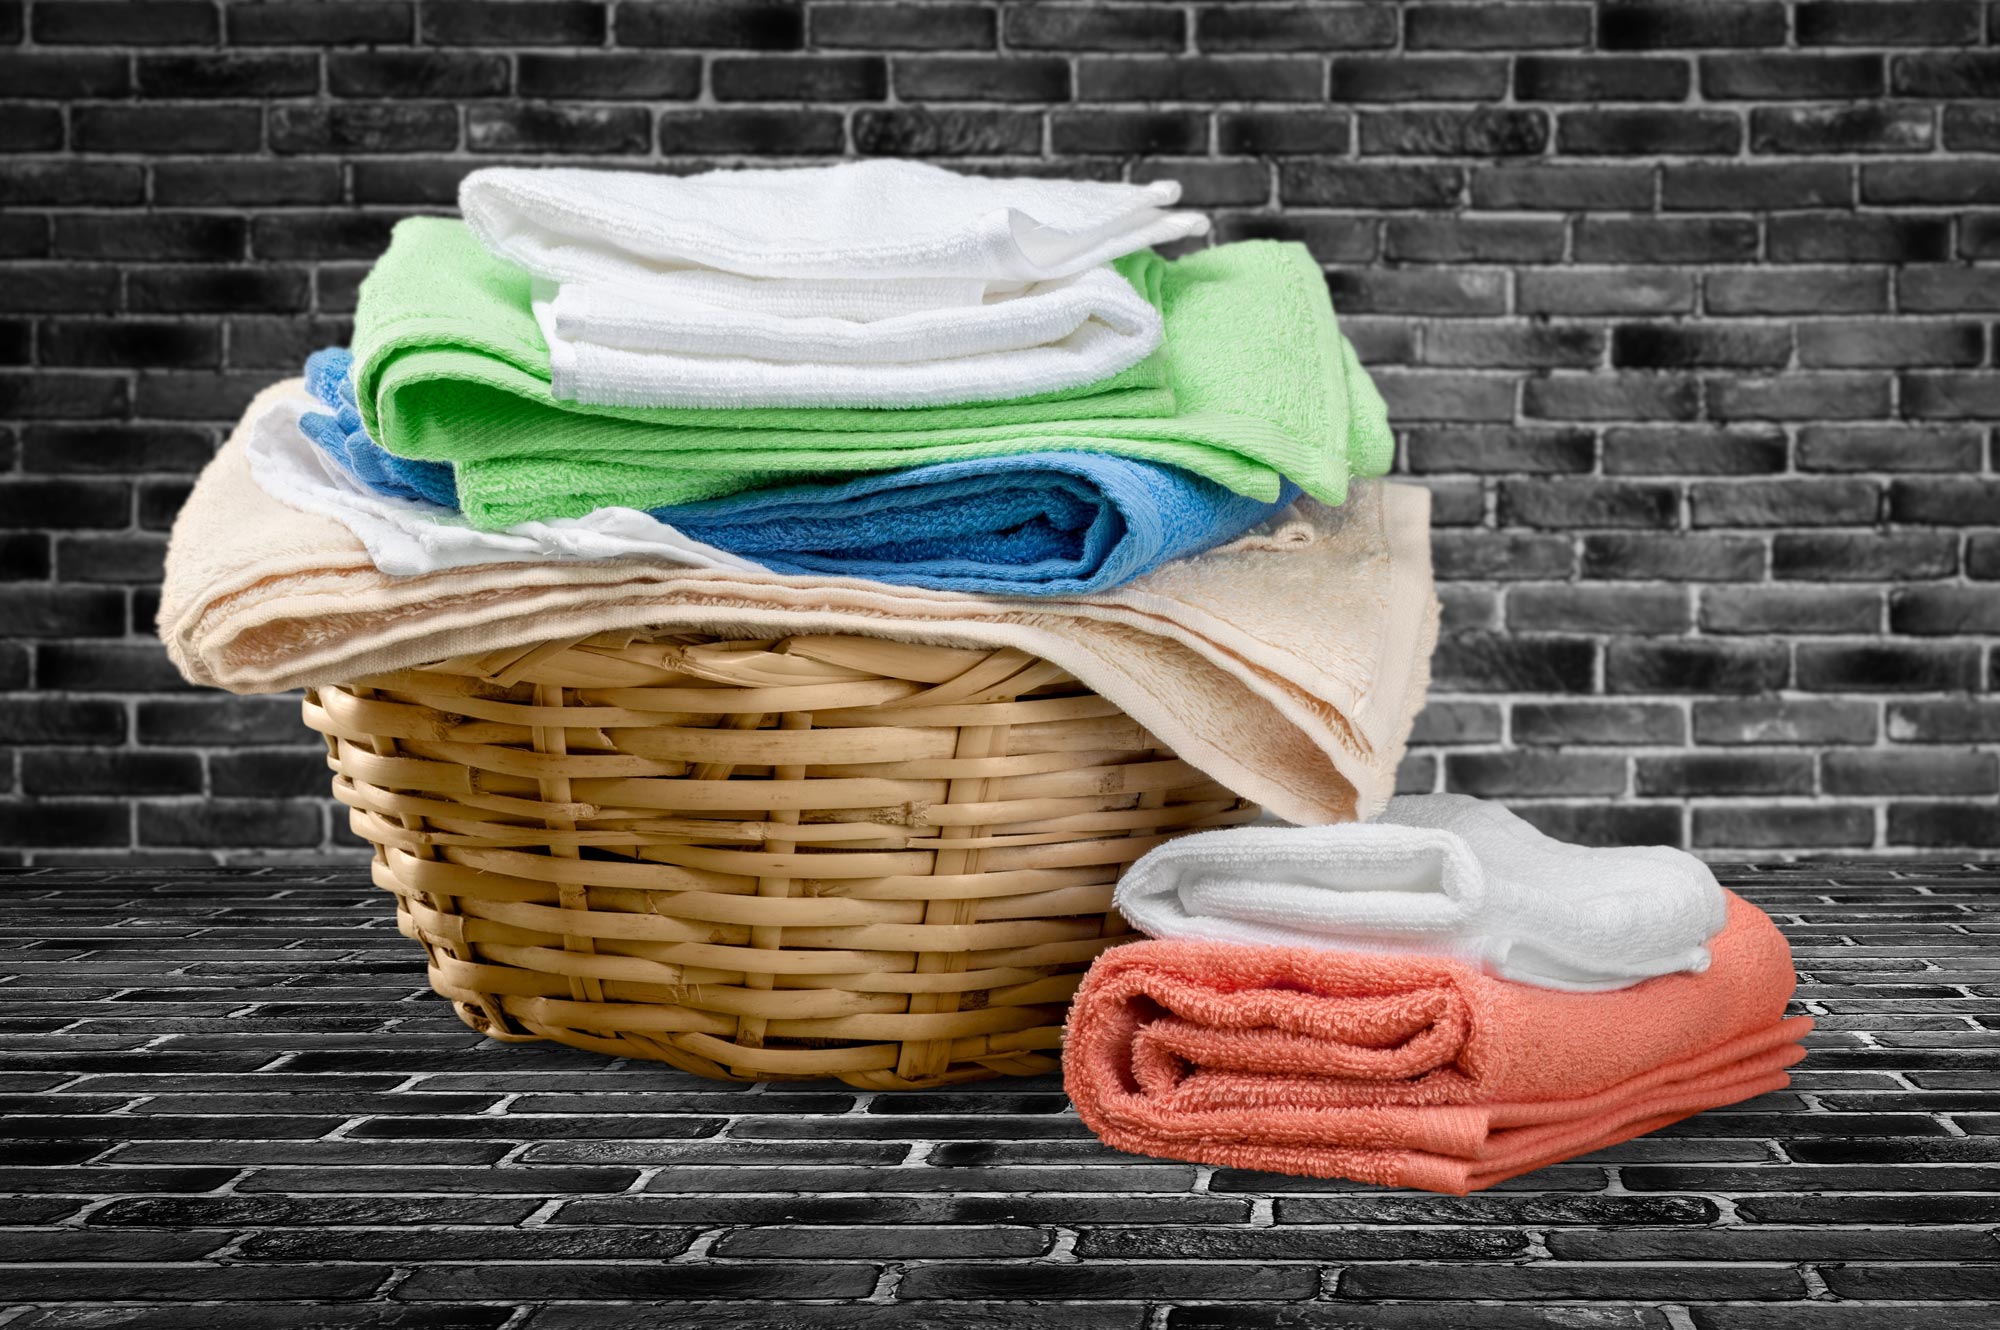 Rainbow Laundry and Linen - Domestic laundry service